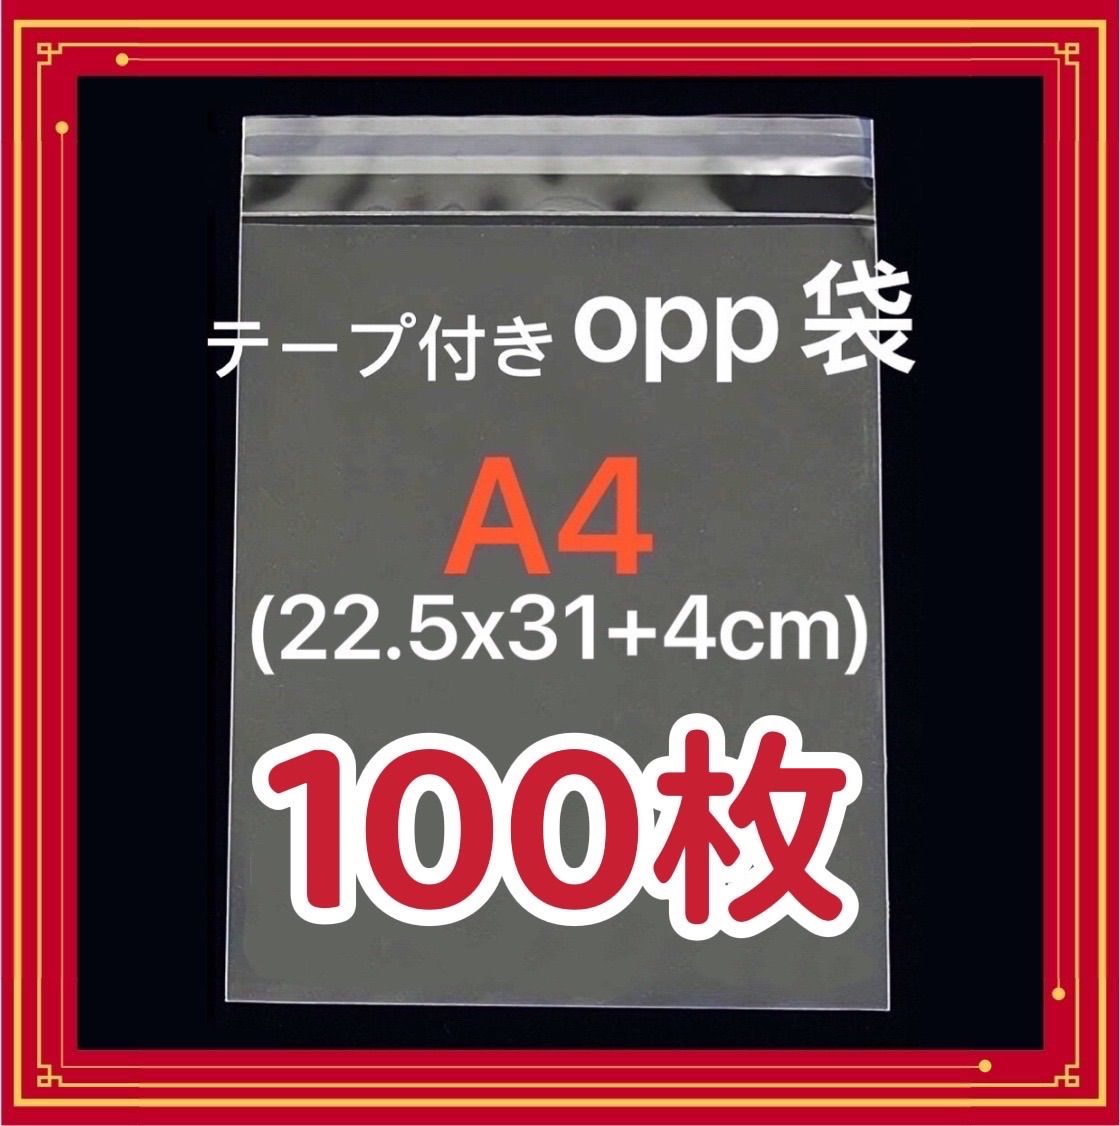 A4 OPP袋 100枚 透明袋 透明封筒 テープ付き 梱包資材 発送用